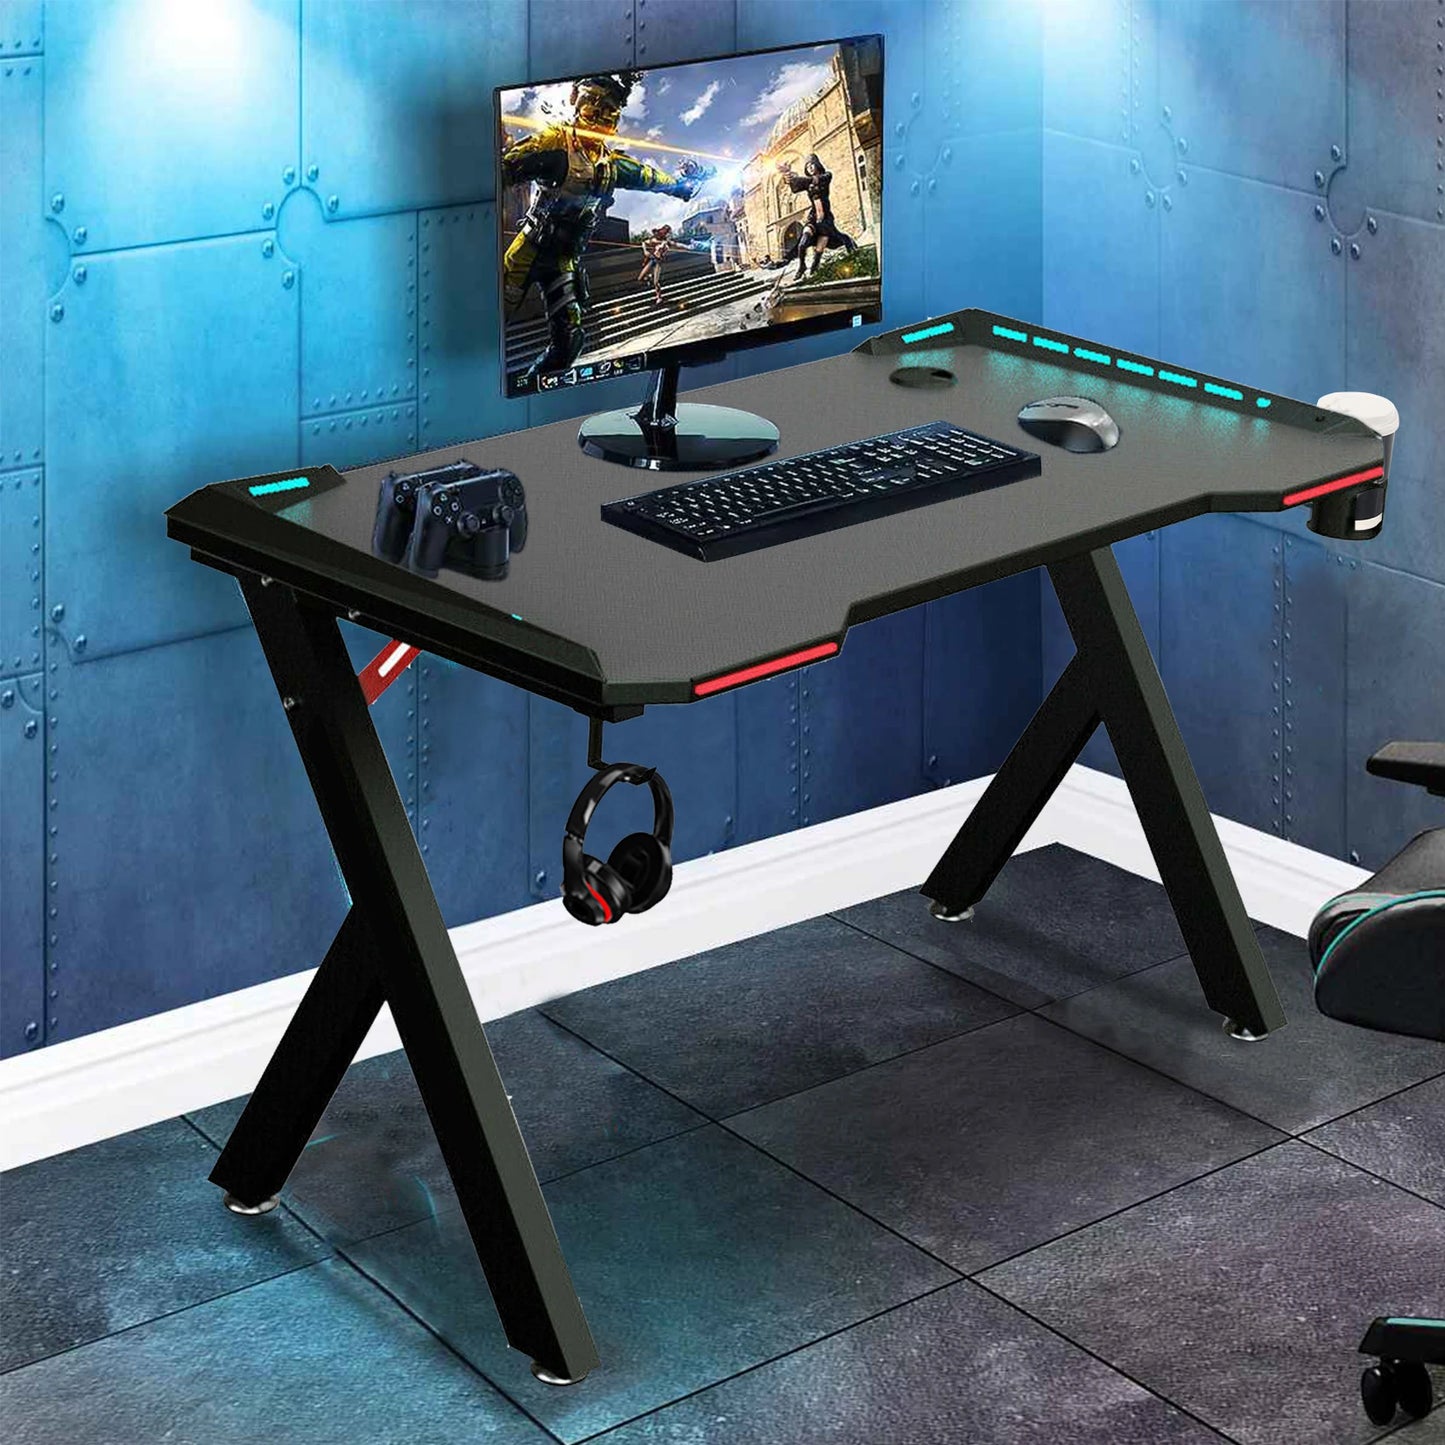 Ergonomic Gamer Desk with RGB LED Lights